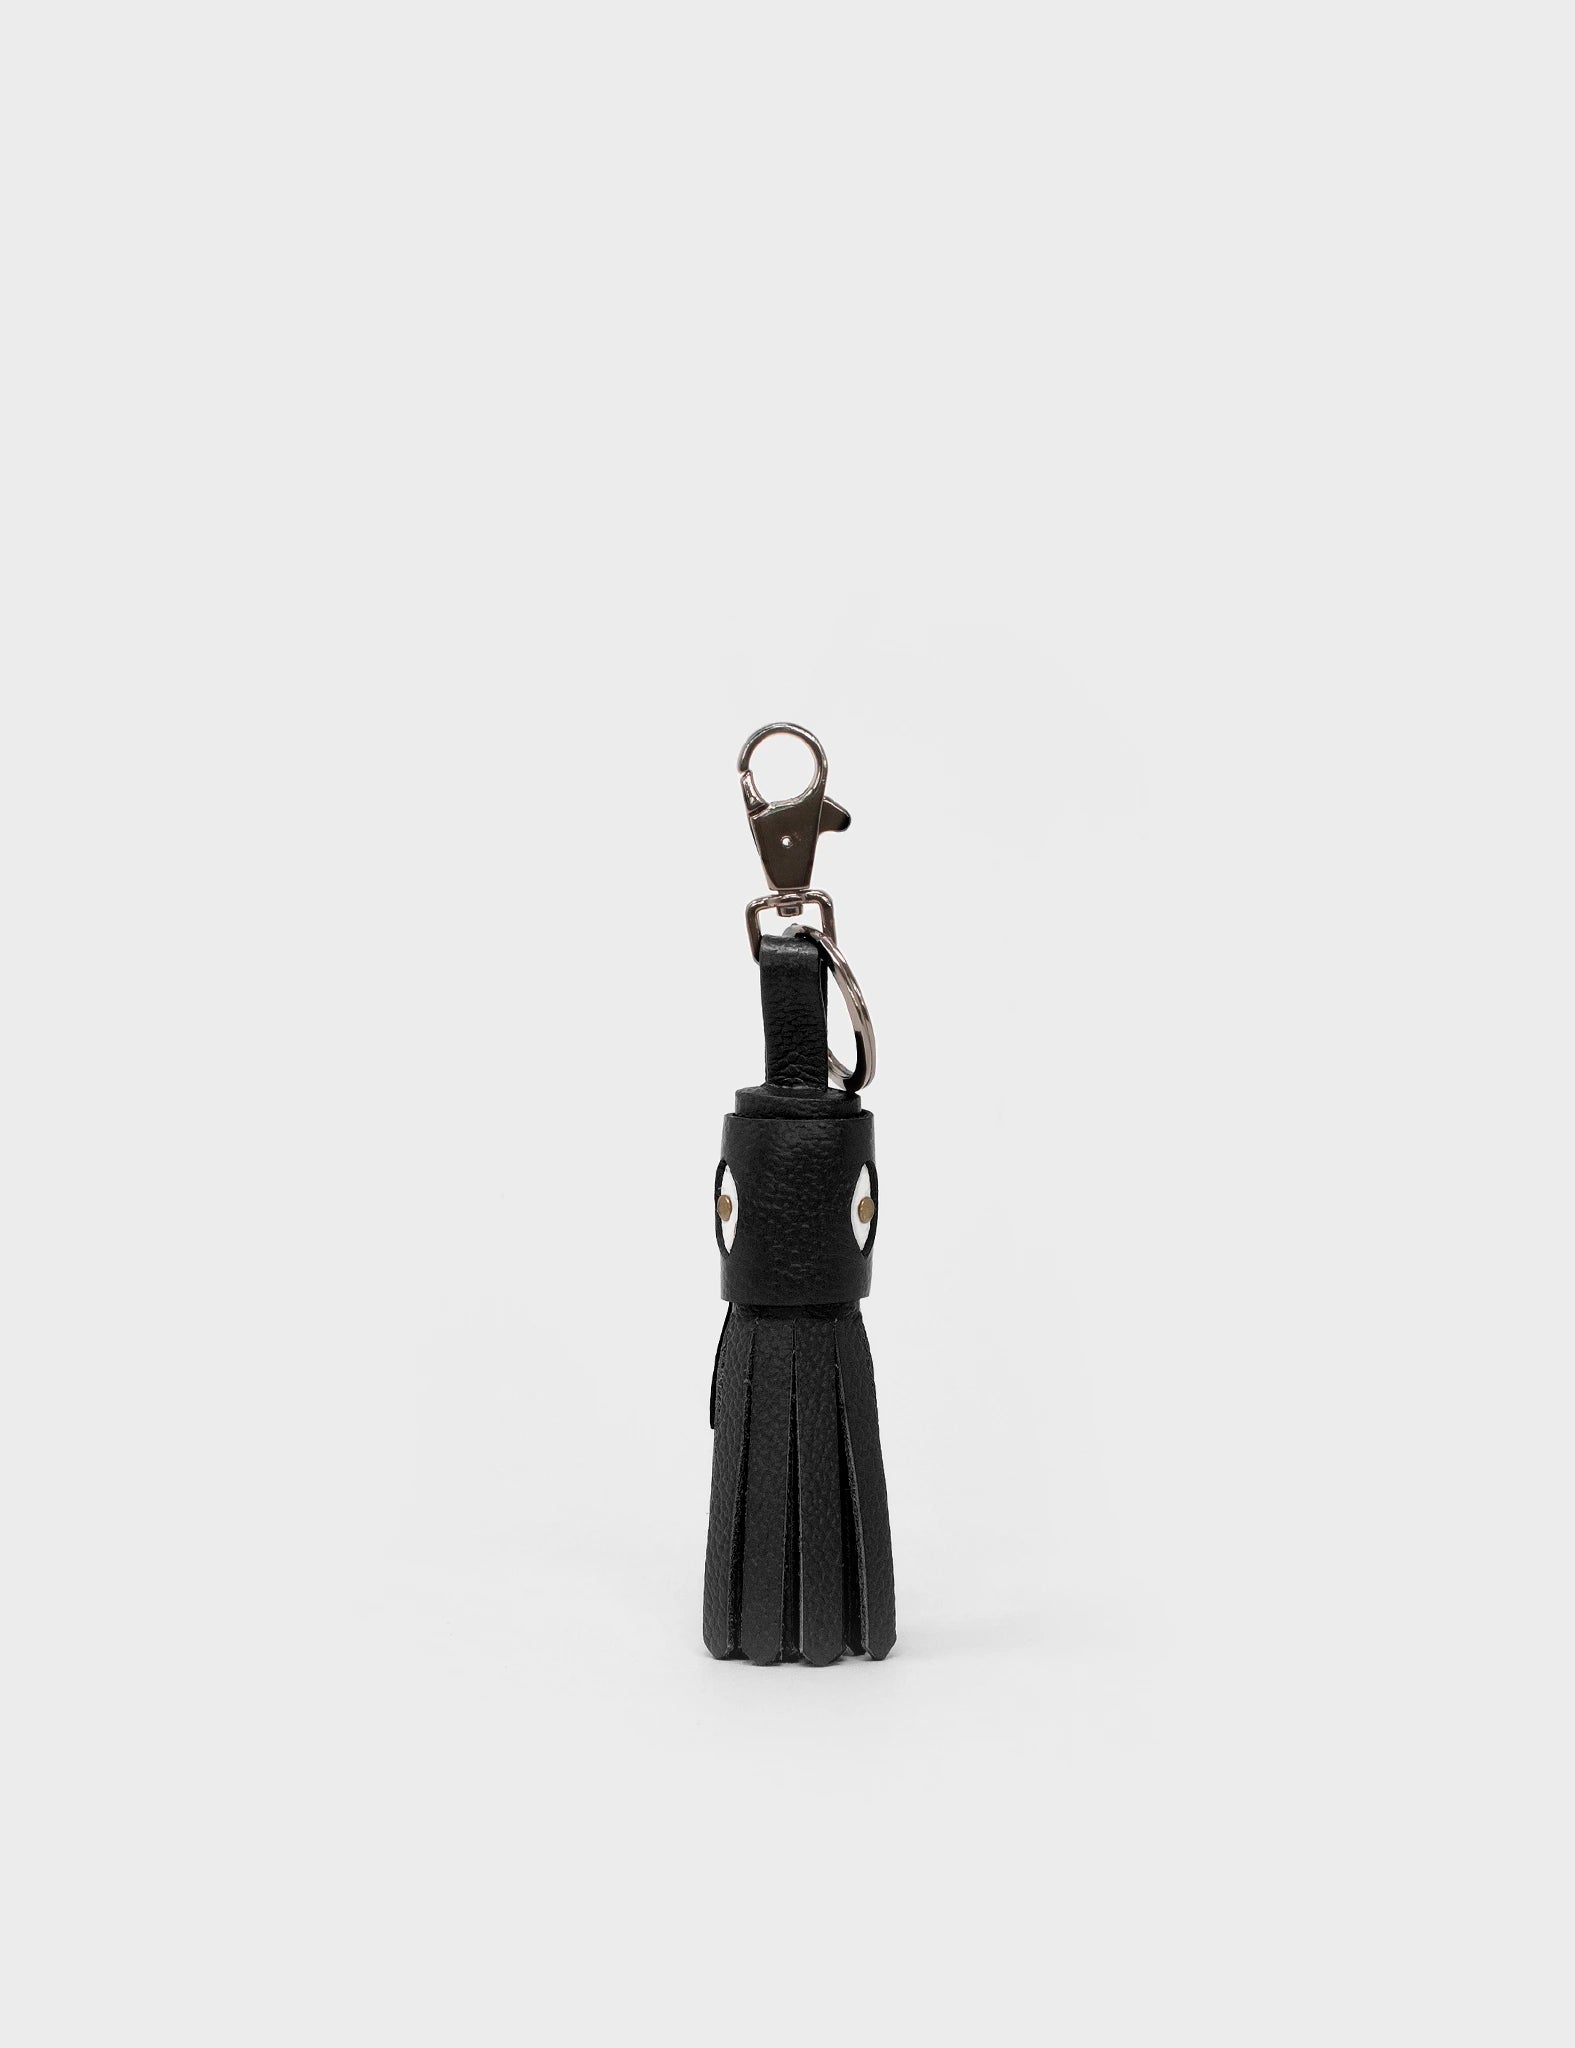 Tassel Squid Callie Marie Hue Charm - Black Leather Keychain